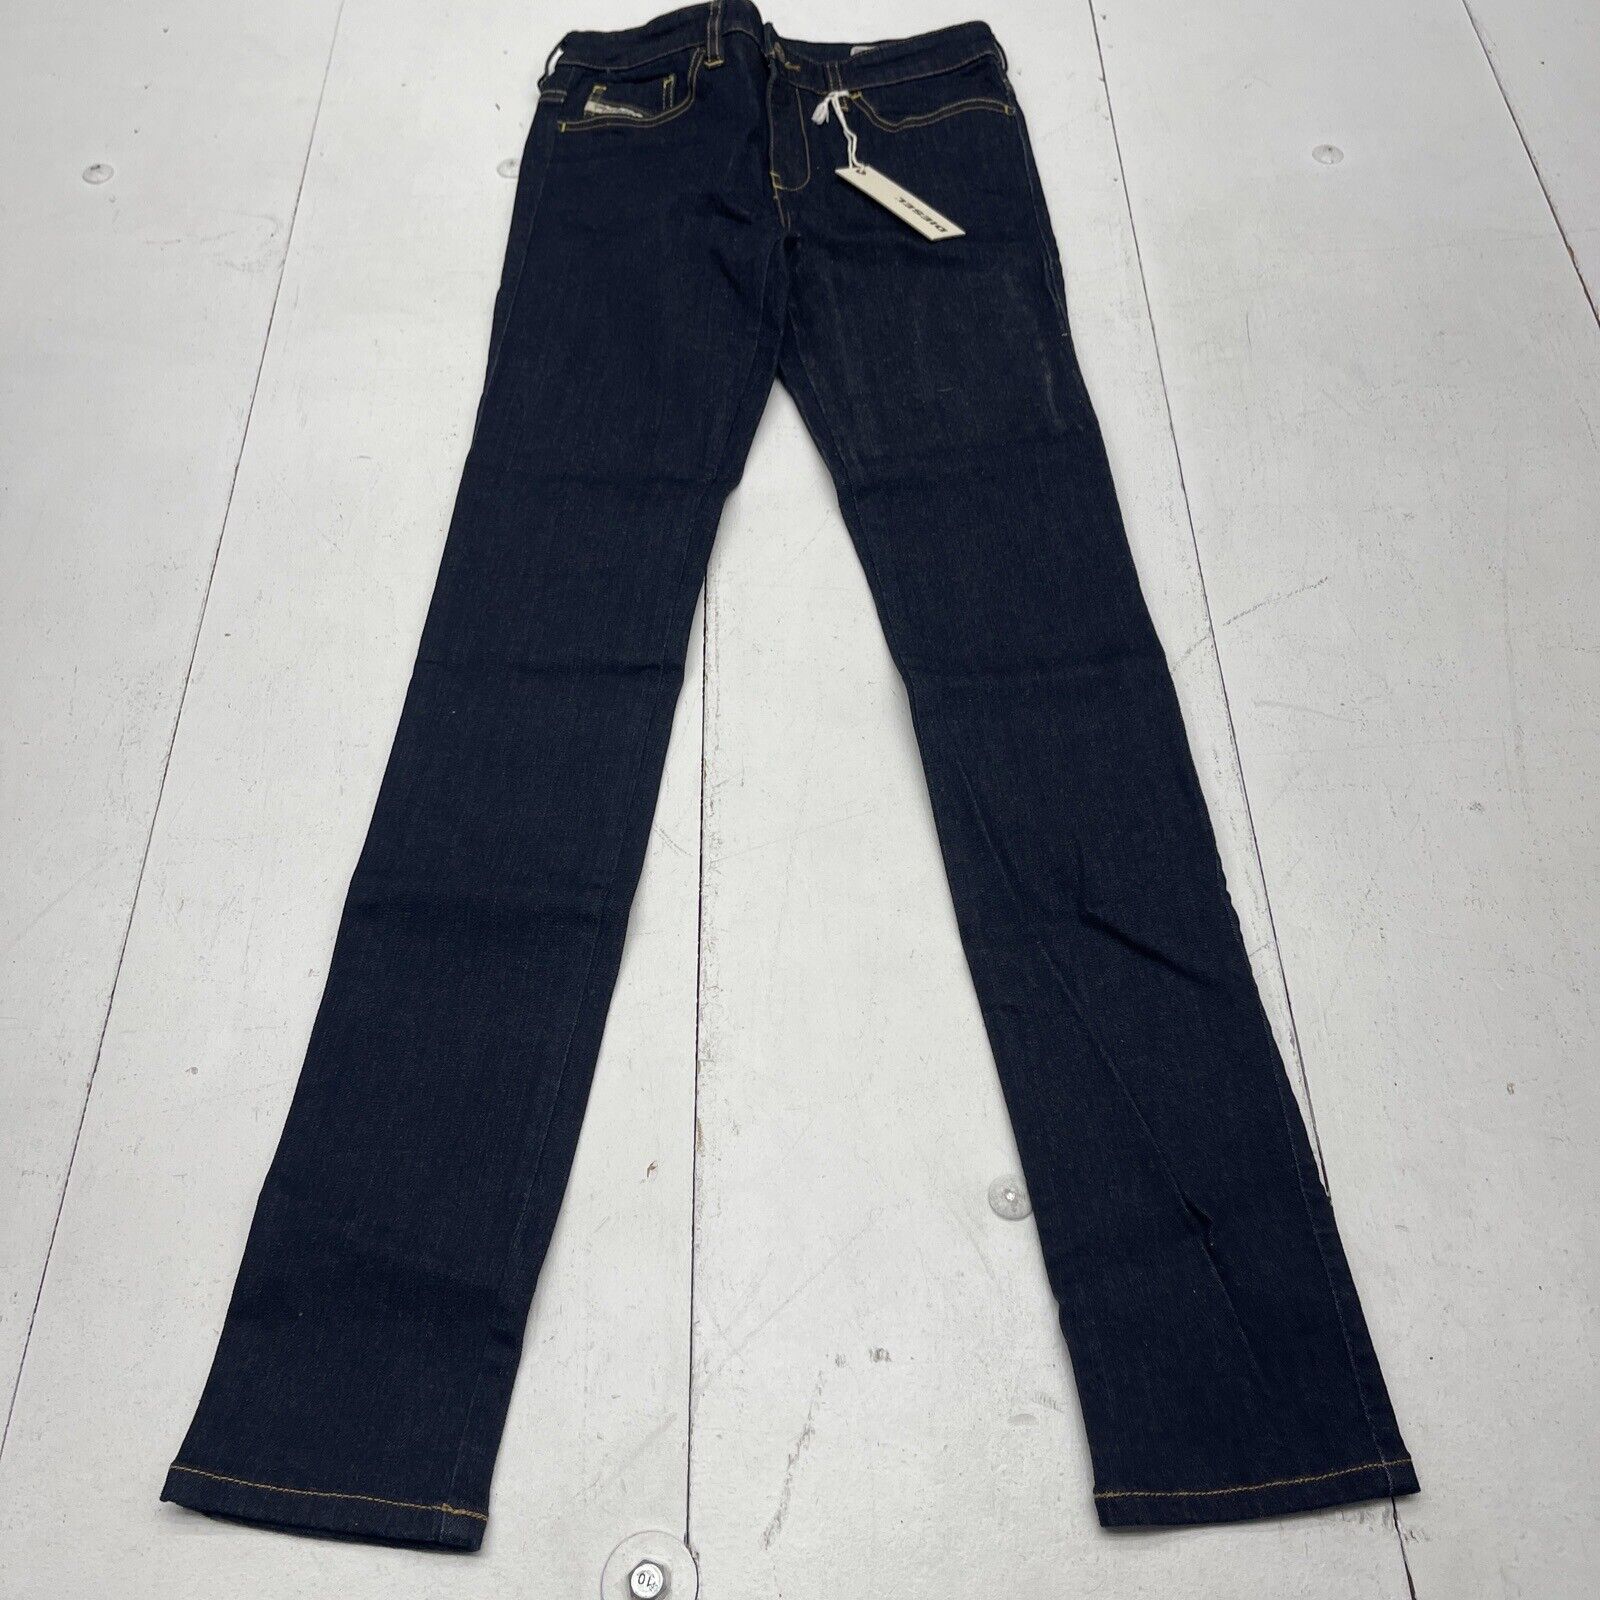 Diesel Skinzee Dark Wash Skinny Jeans Women’s Size 27/32 New $168*